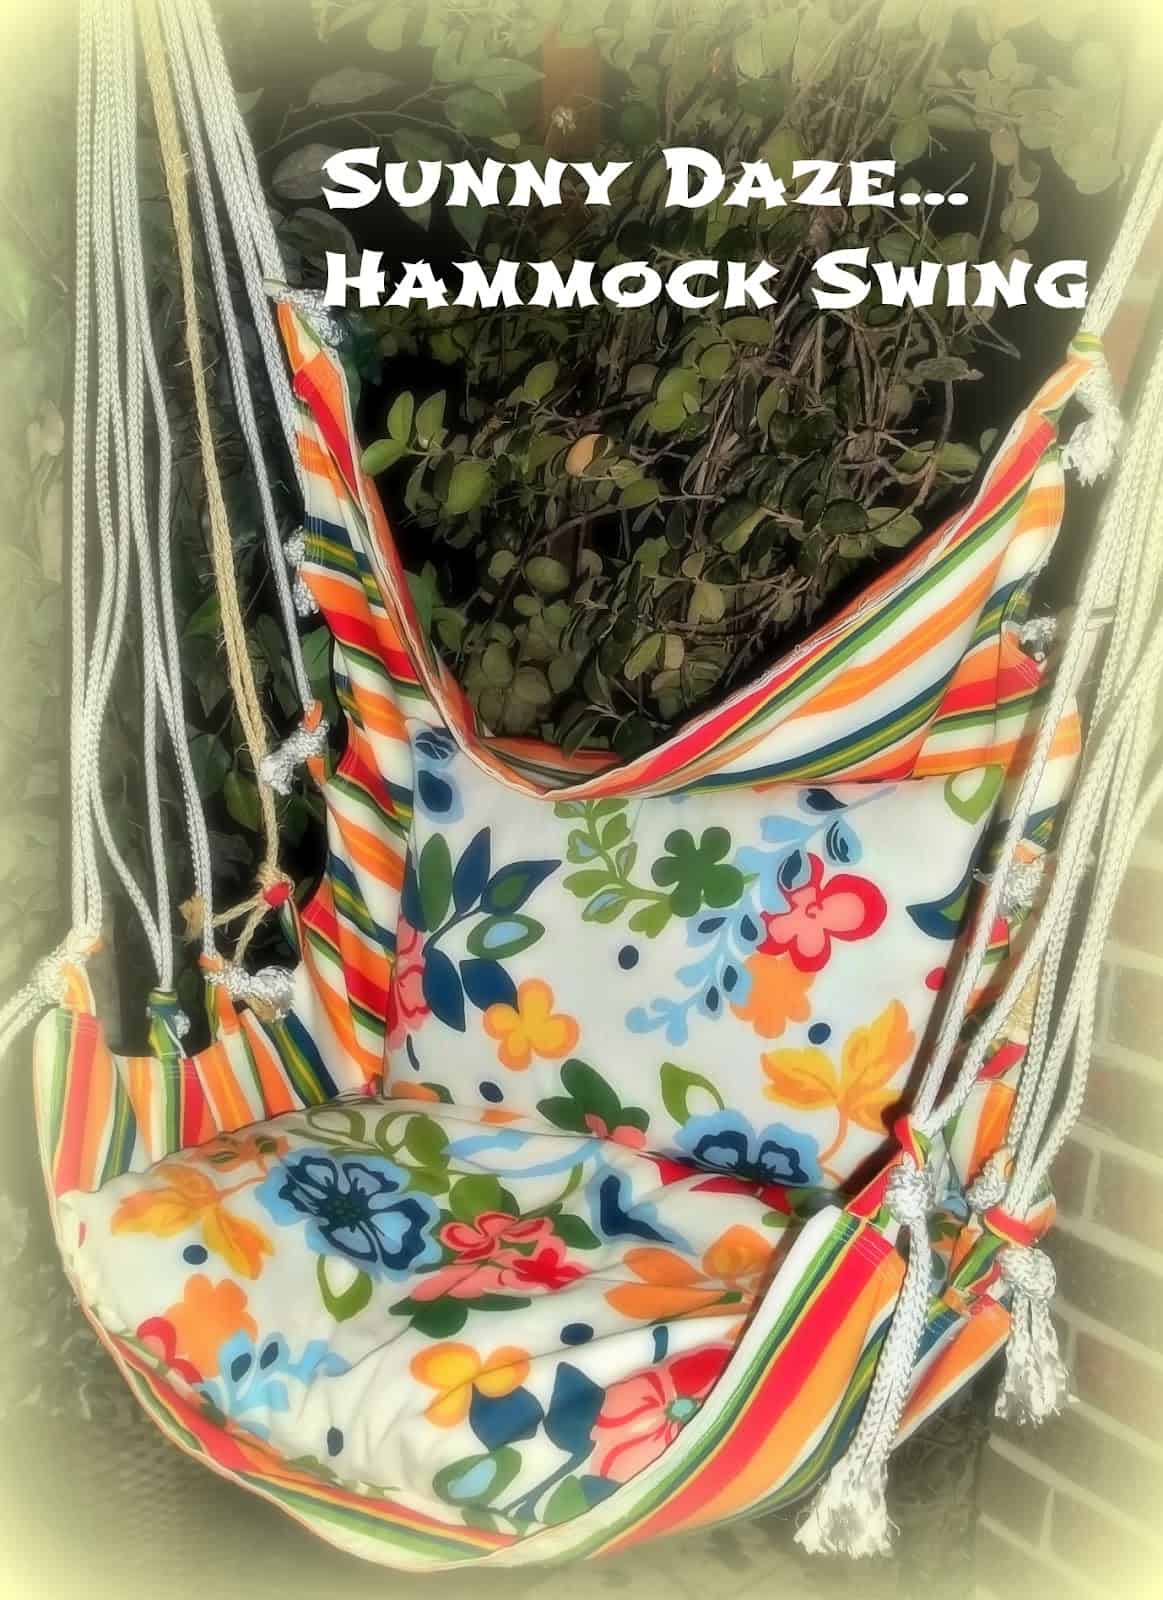 Upright hammock swing